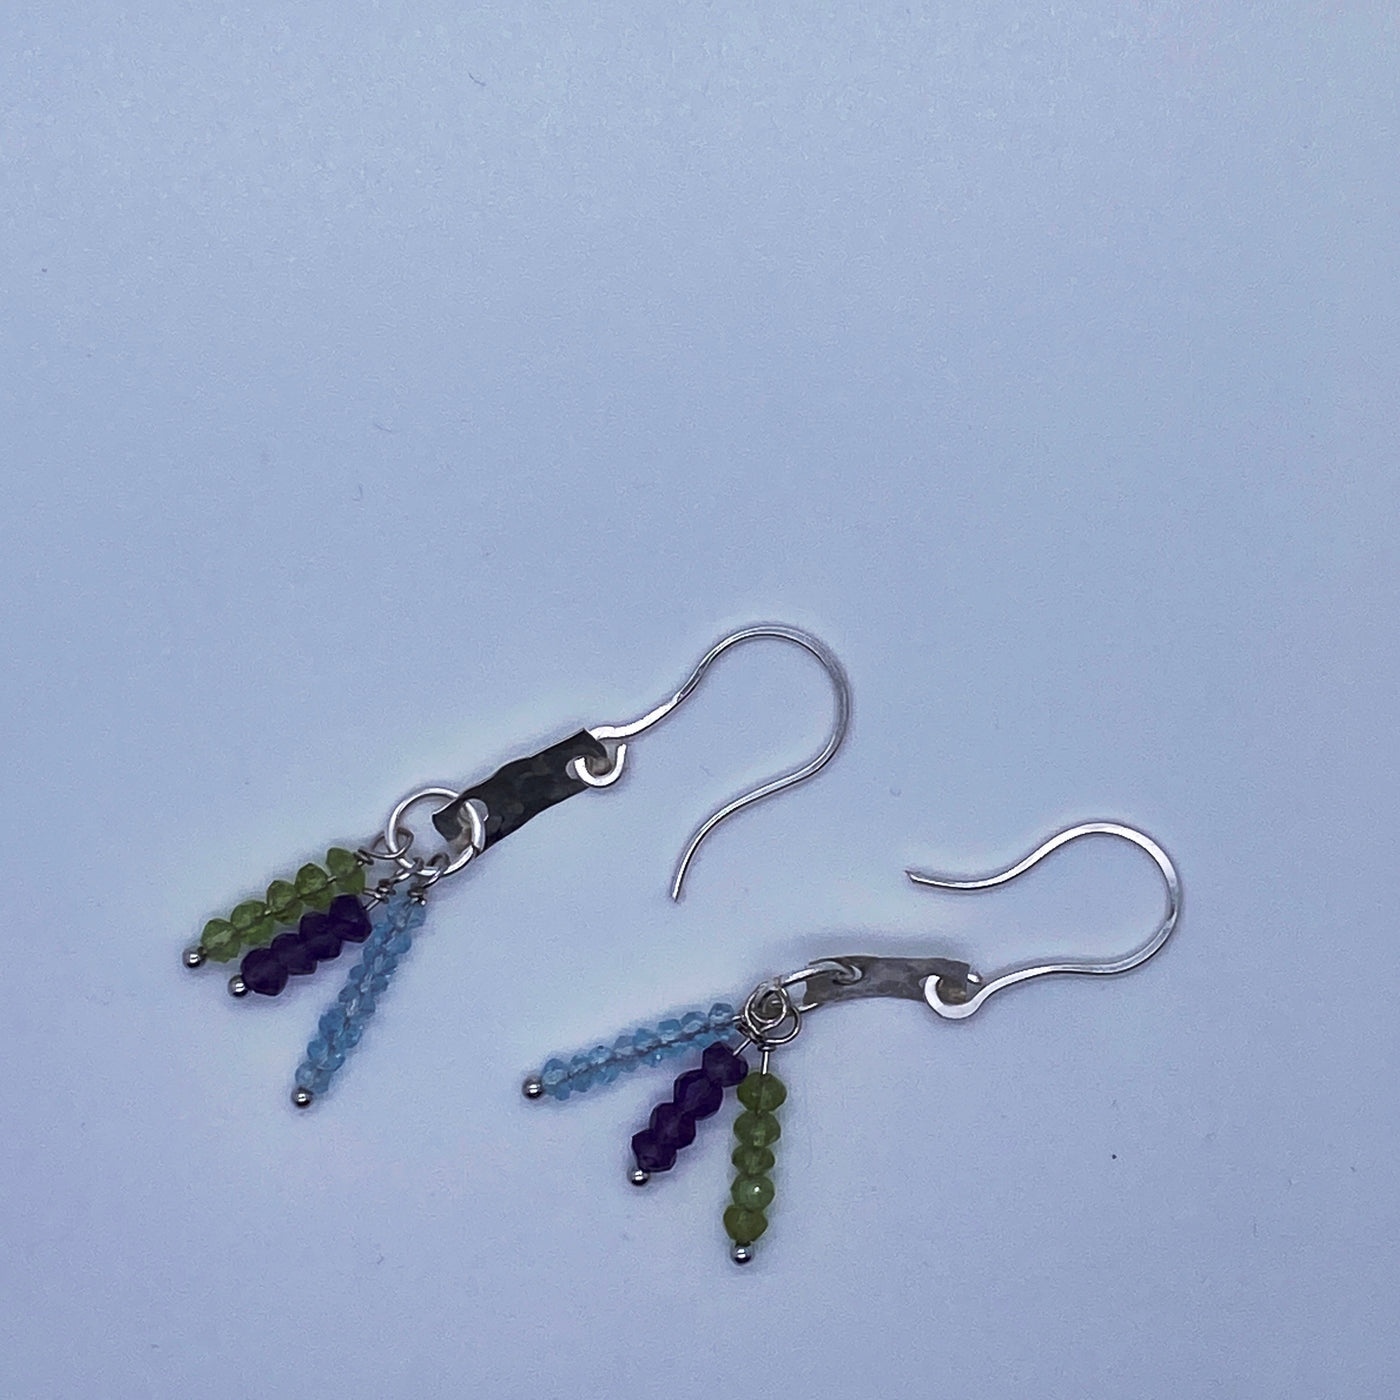 Peridot, amethyst and aquamarine on silver earrings